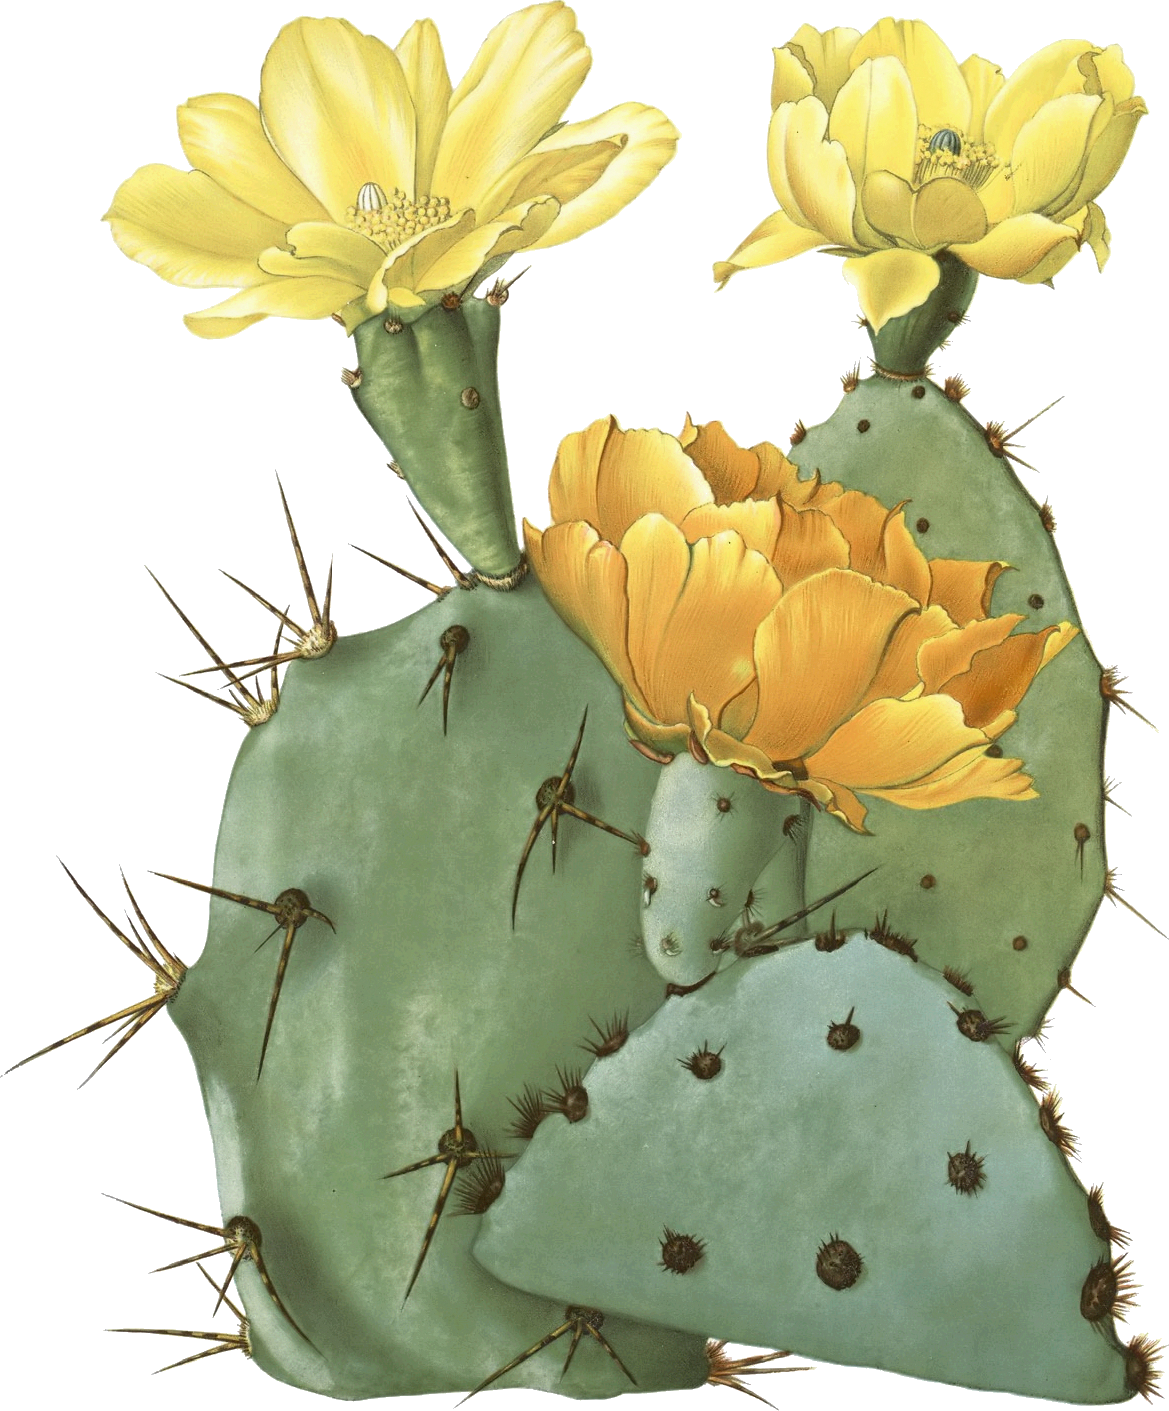 Cactus Desert Plant Png Image Purepng Free Transparen - vrogue.co